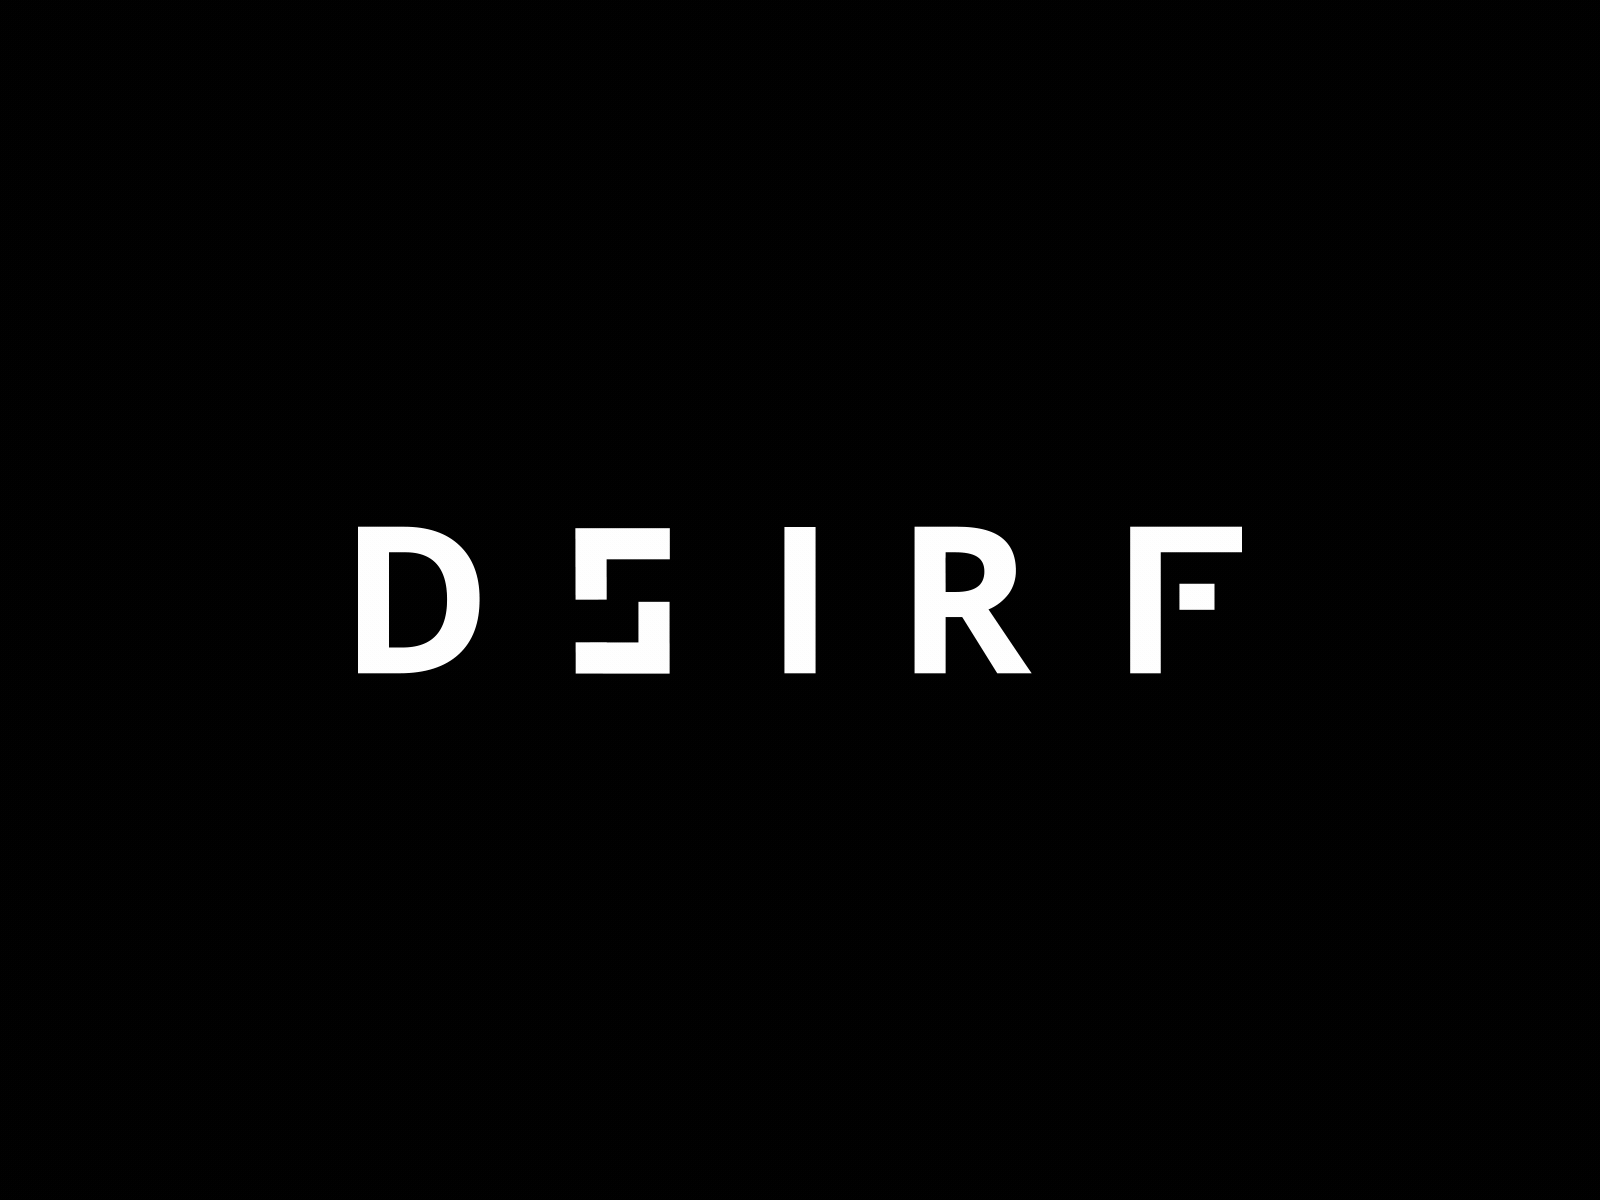 DSIRF - Logo Animation